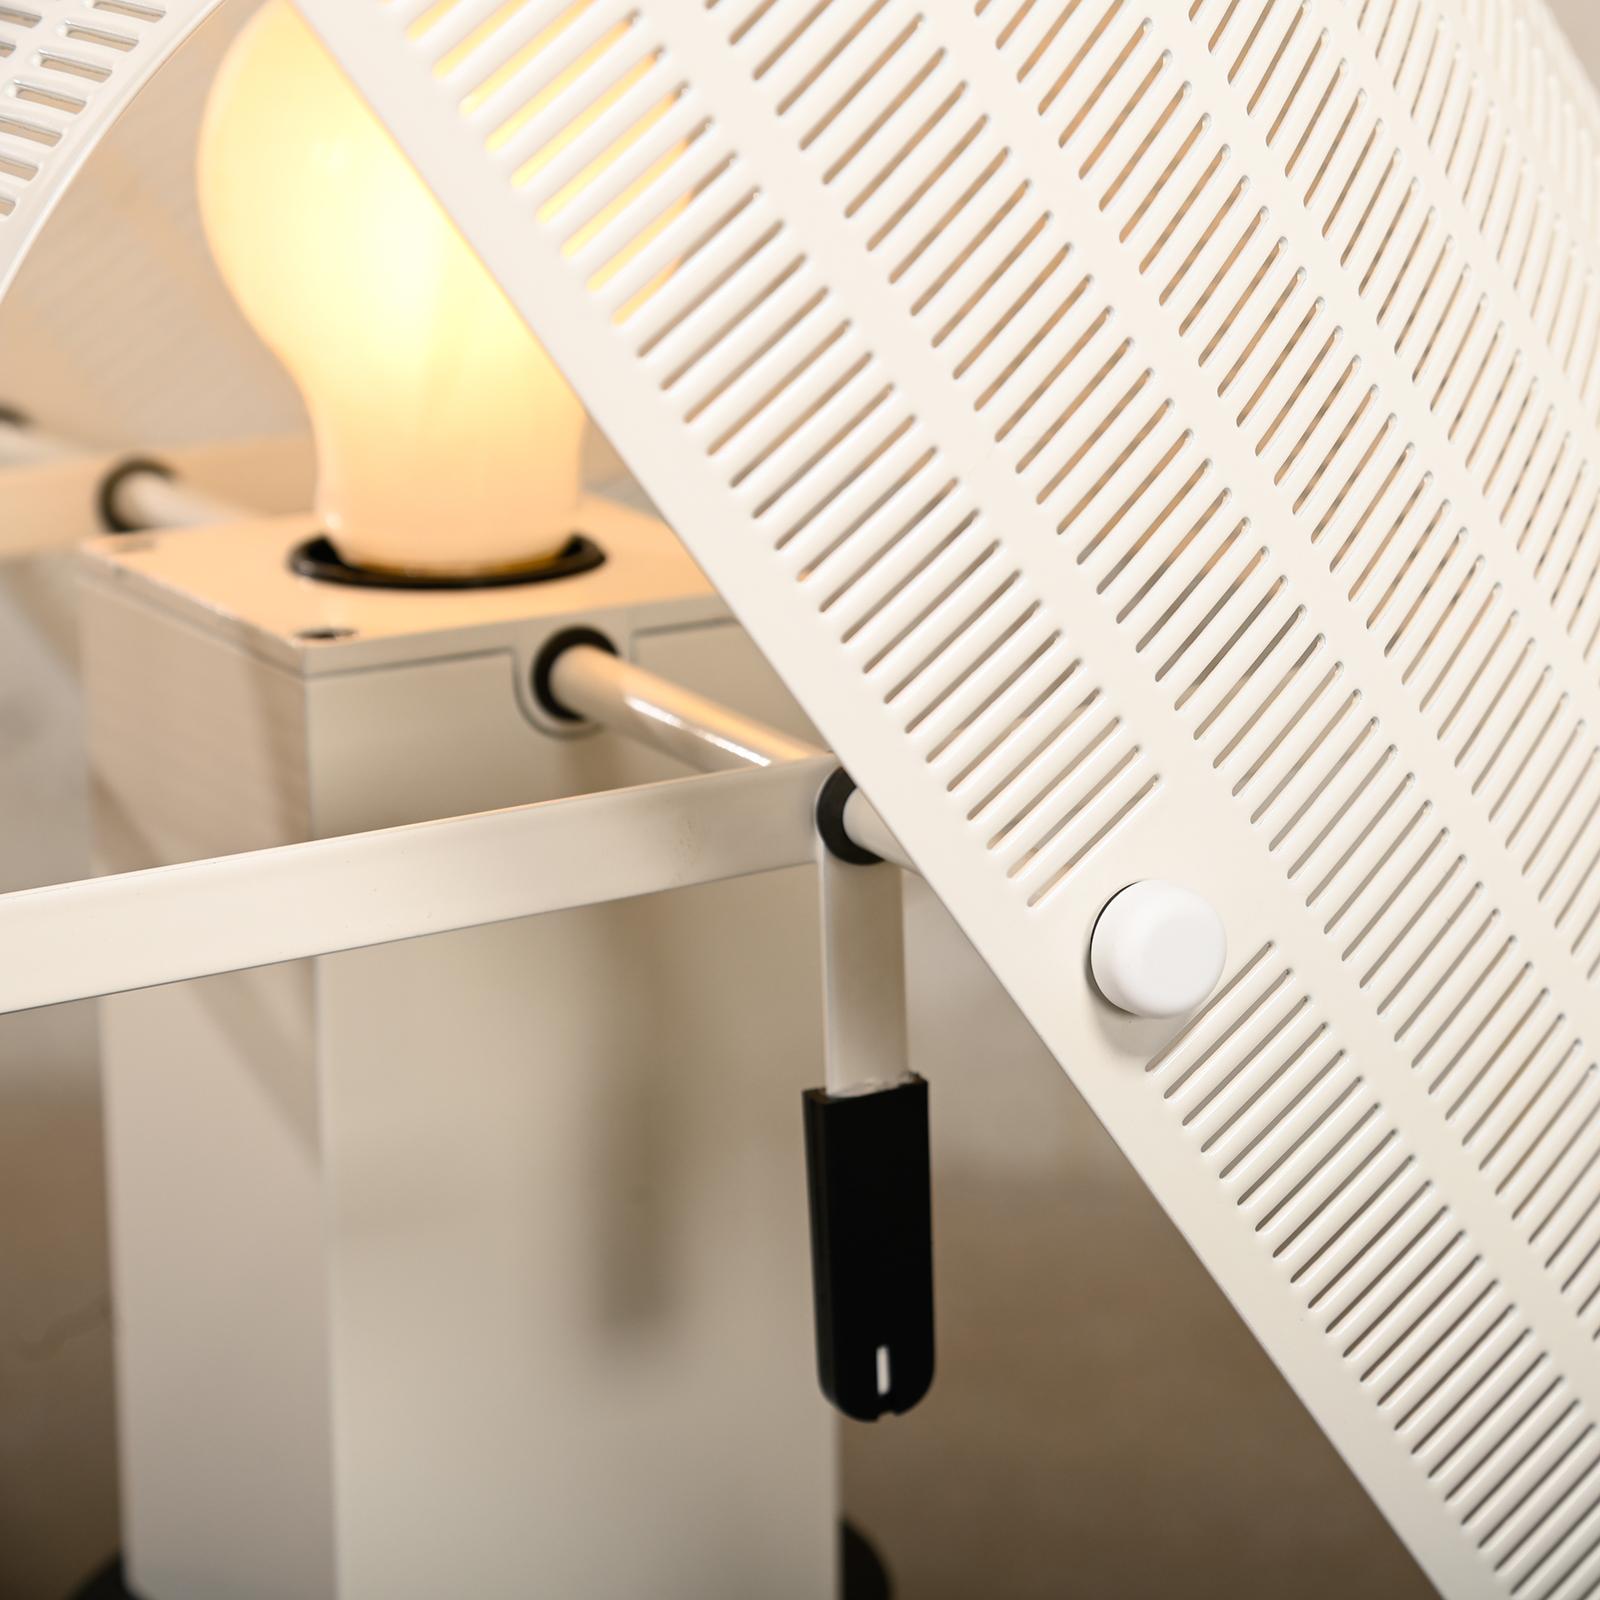 Mario Botta Shogun Table Lamp in black and white for Artemide, Italy For Sale 5